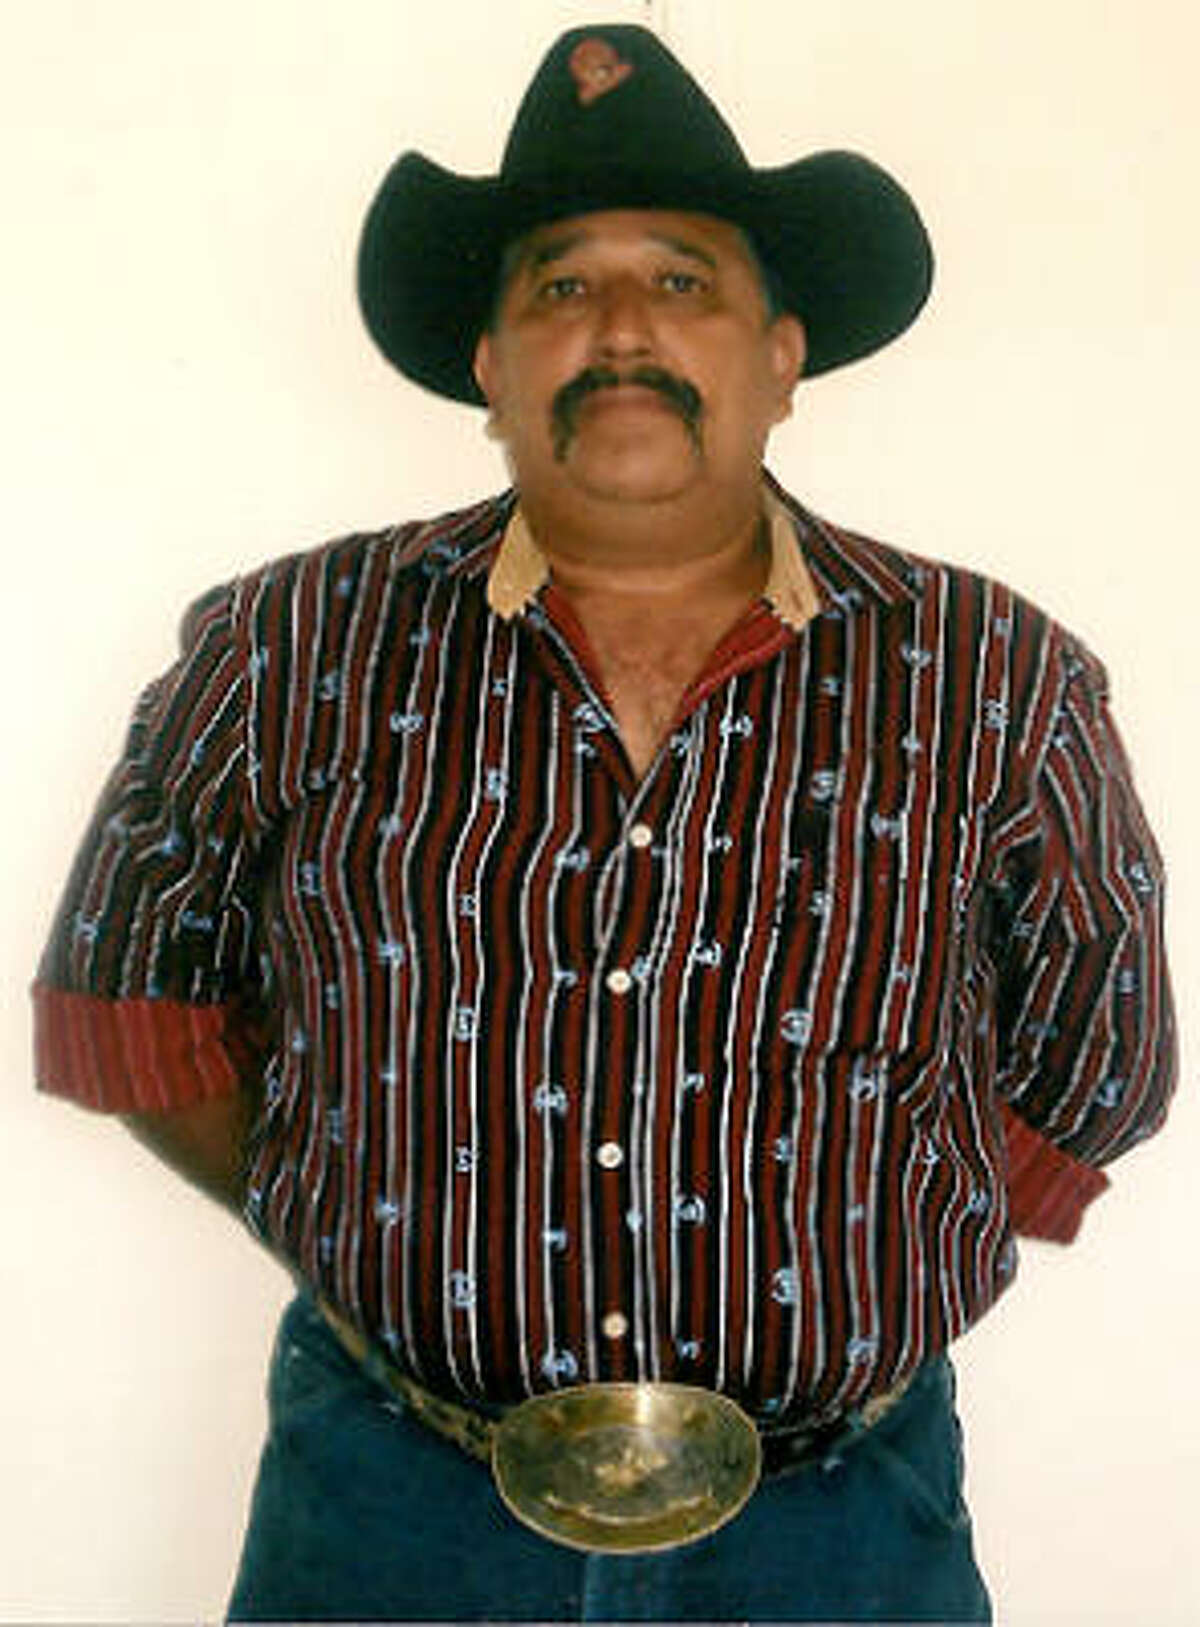 Juvenio Guerro was shot to death in the Sugar Land crime.